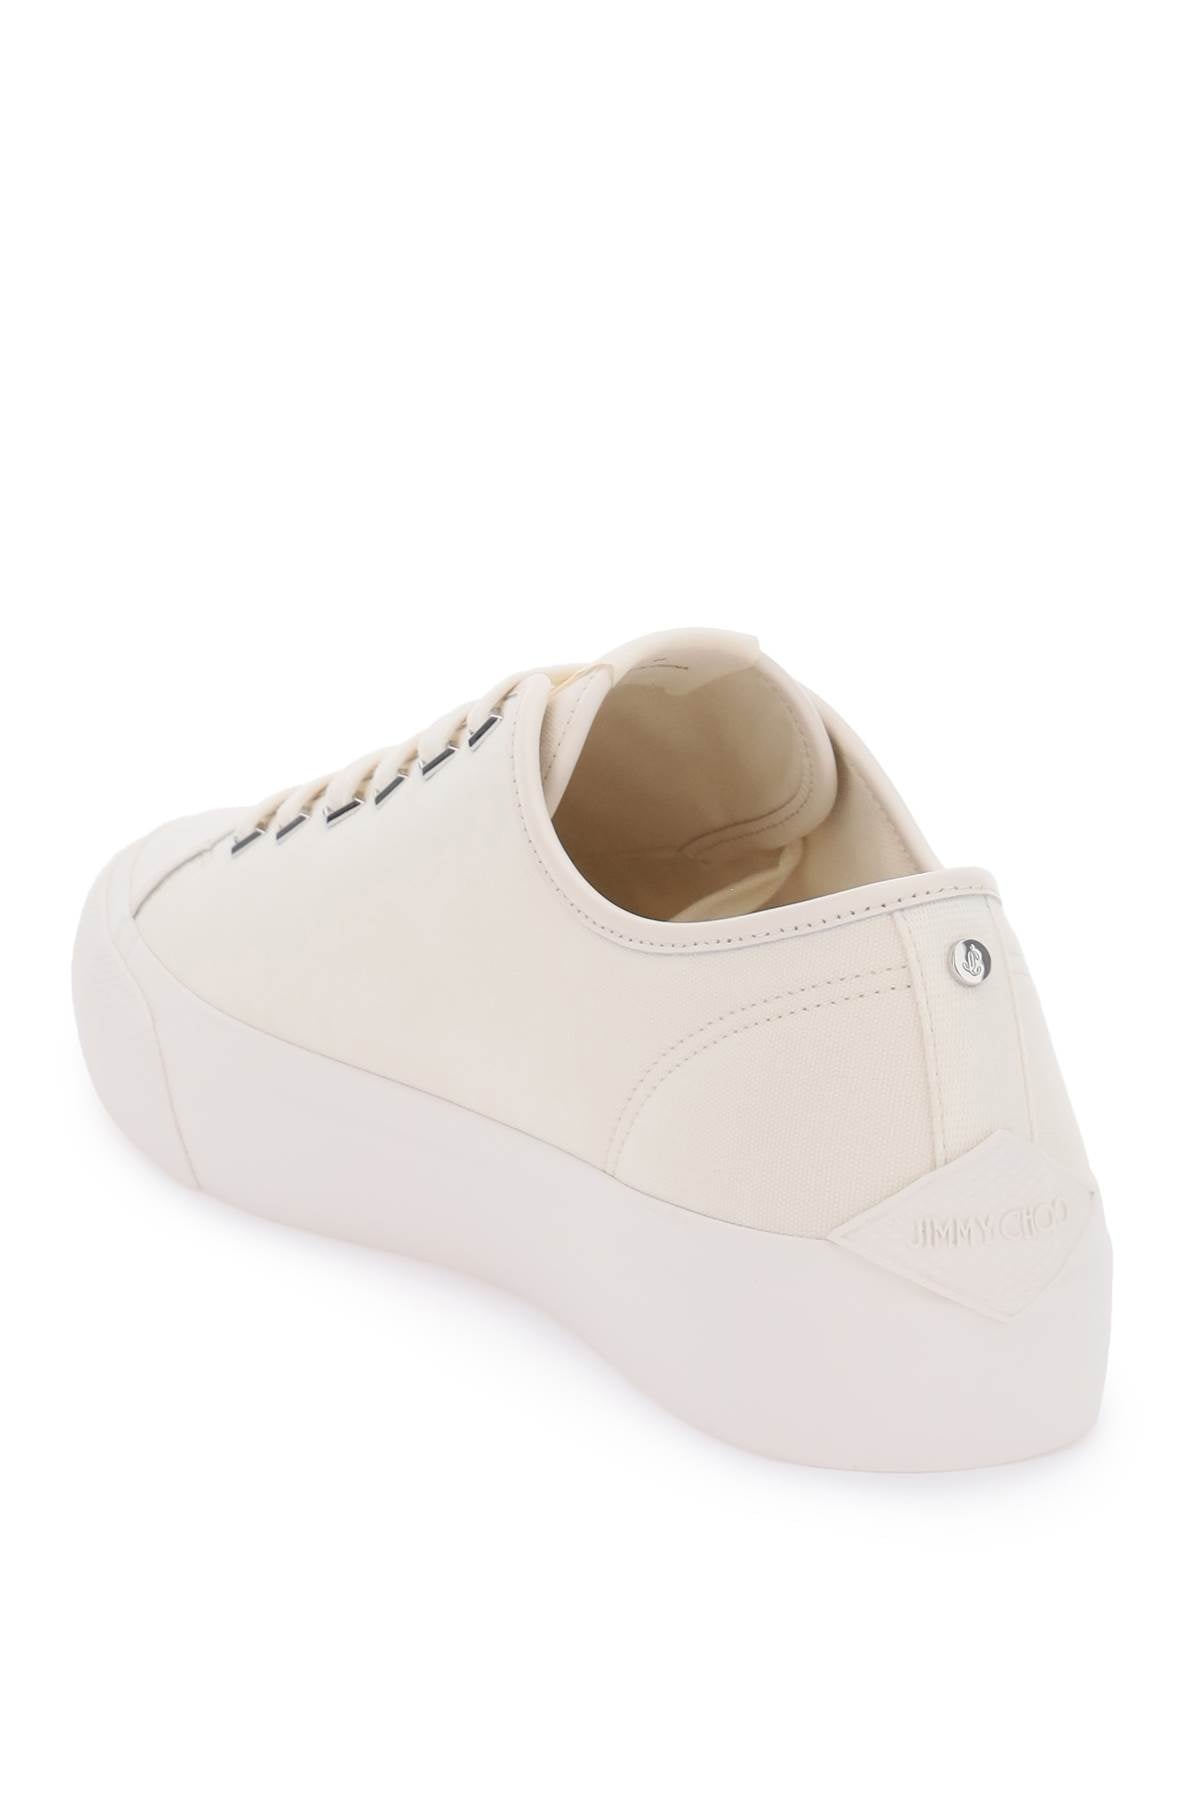 Jimmy Choo Palma Maxi Sneakers White